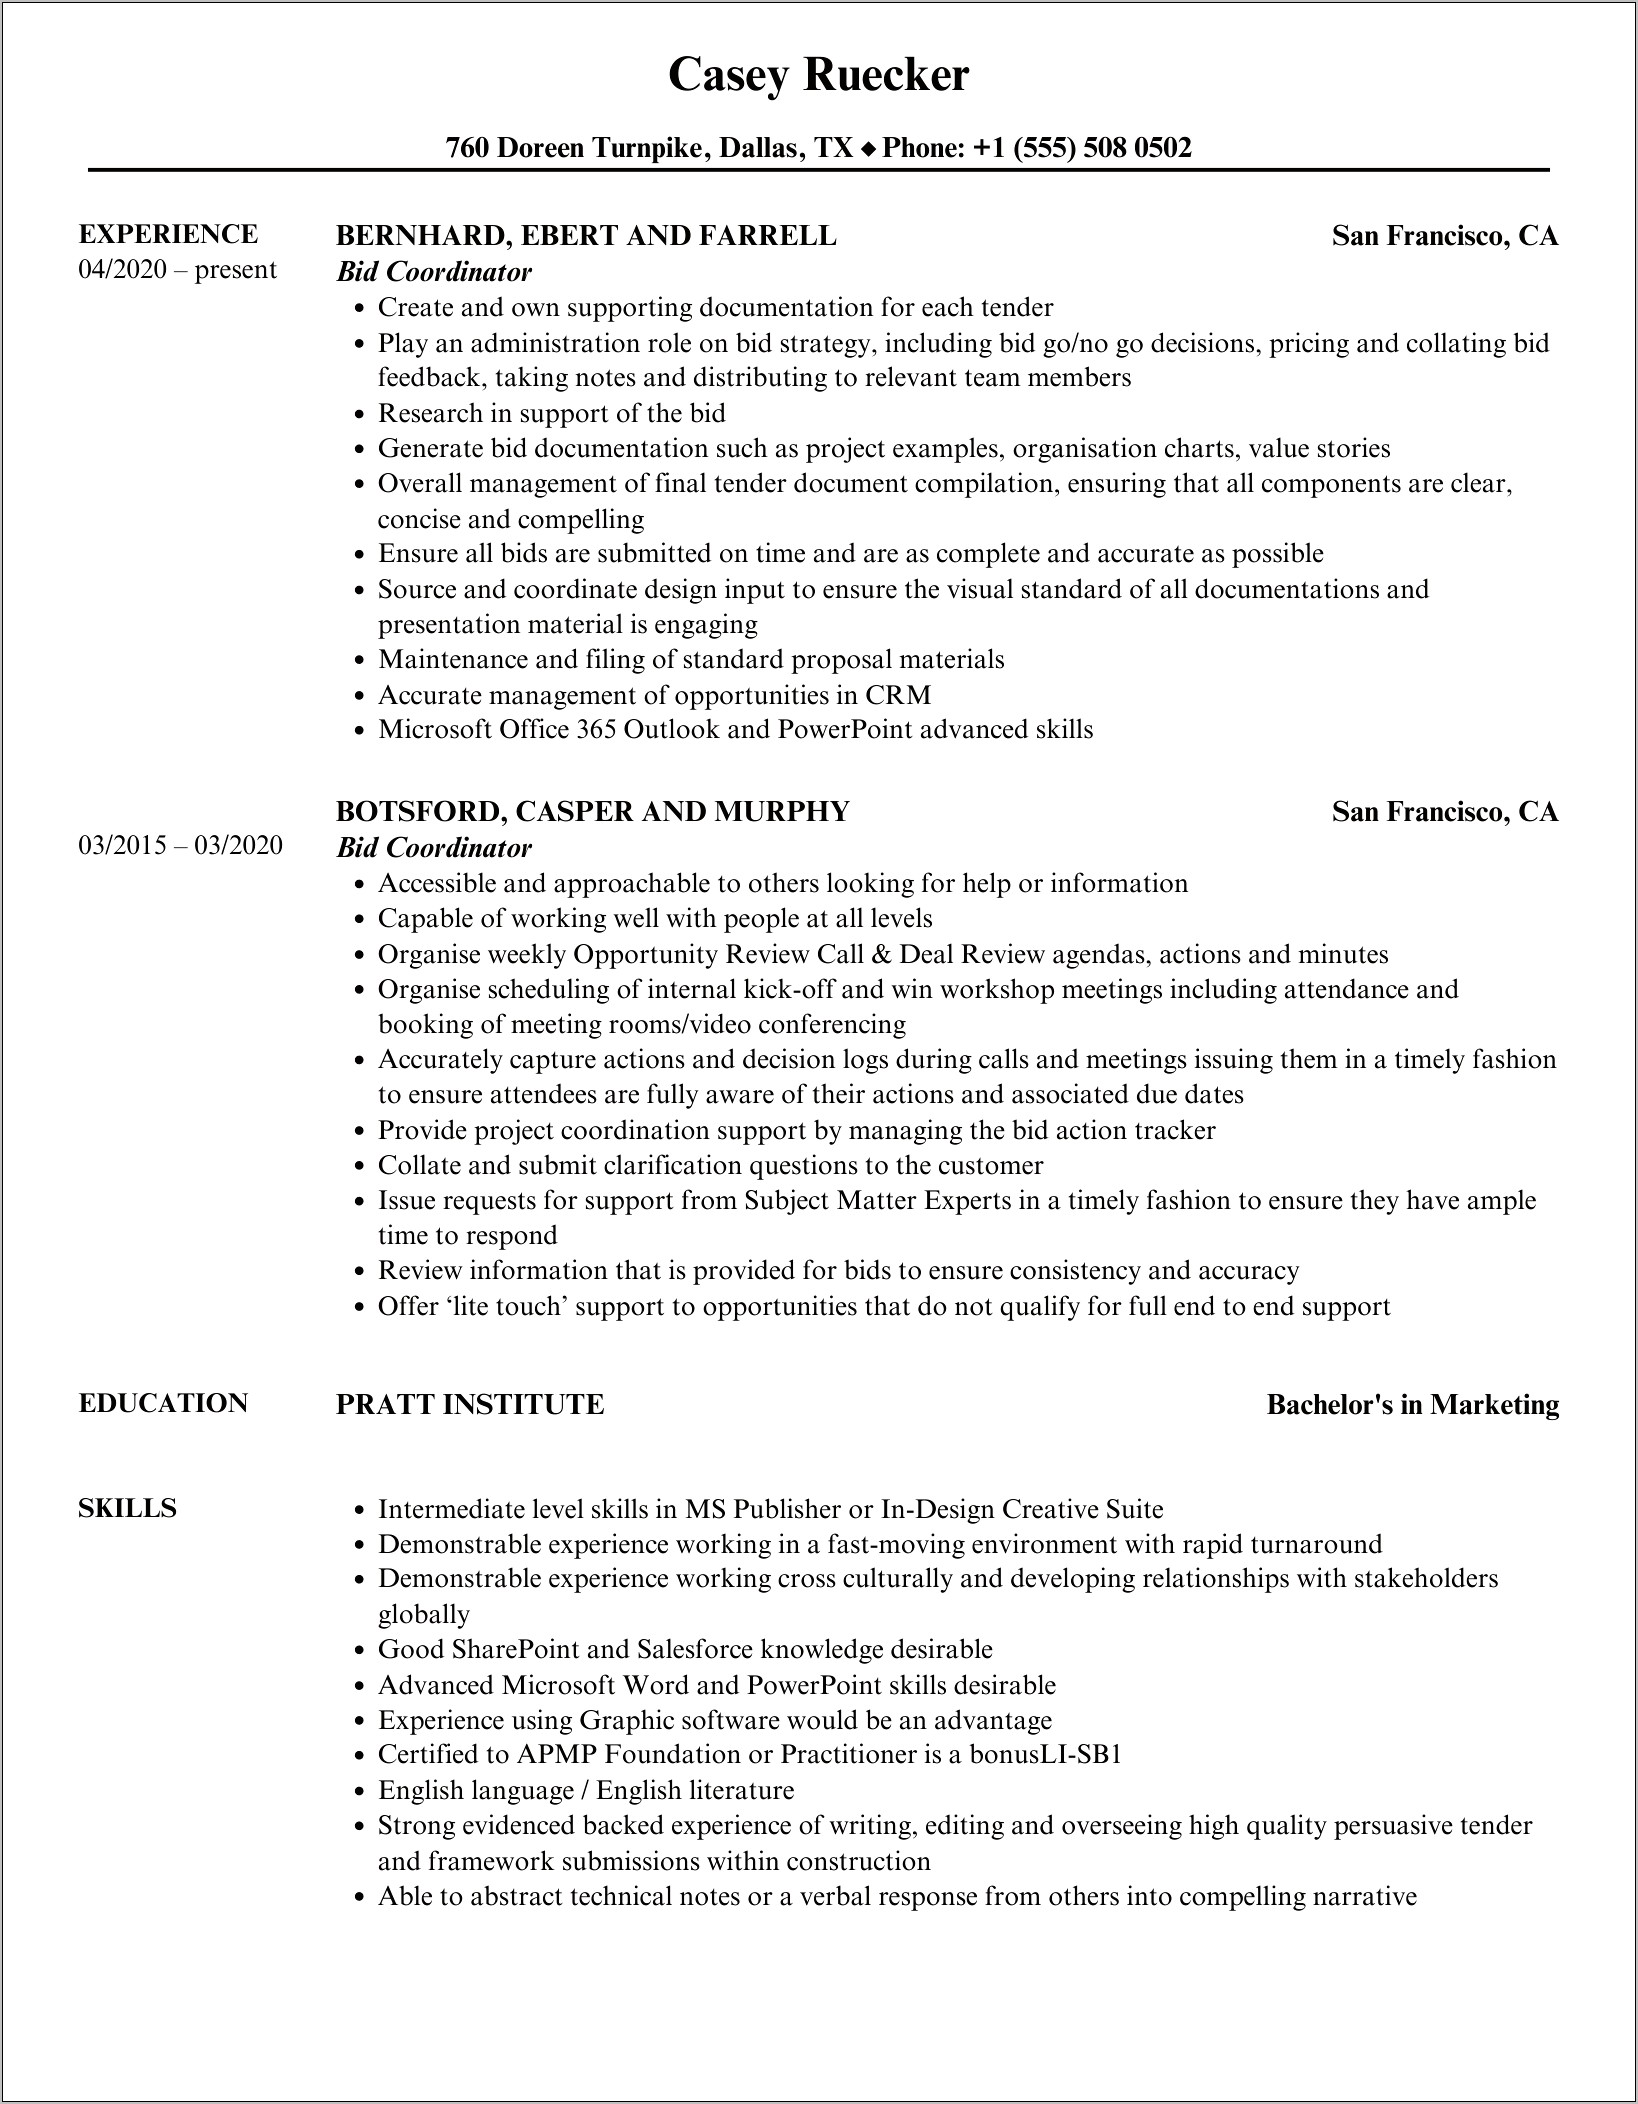 Sample Resume For Bid Coordinator